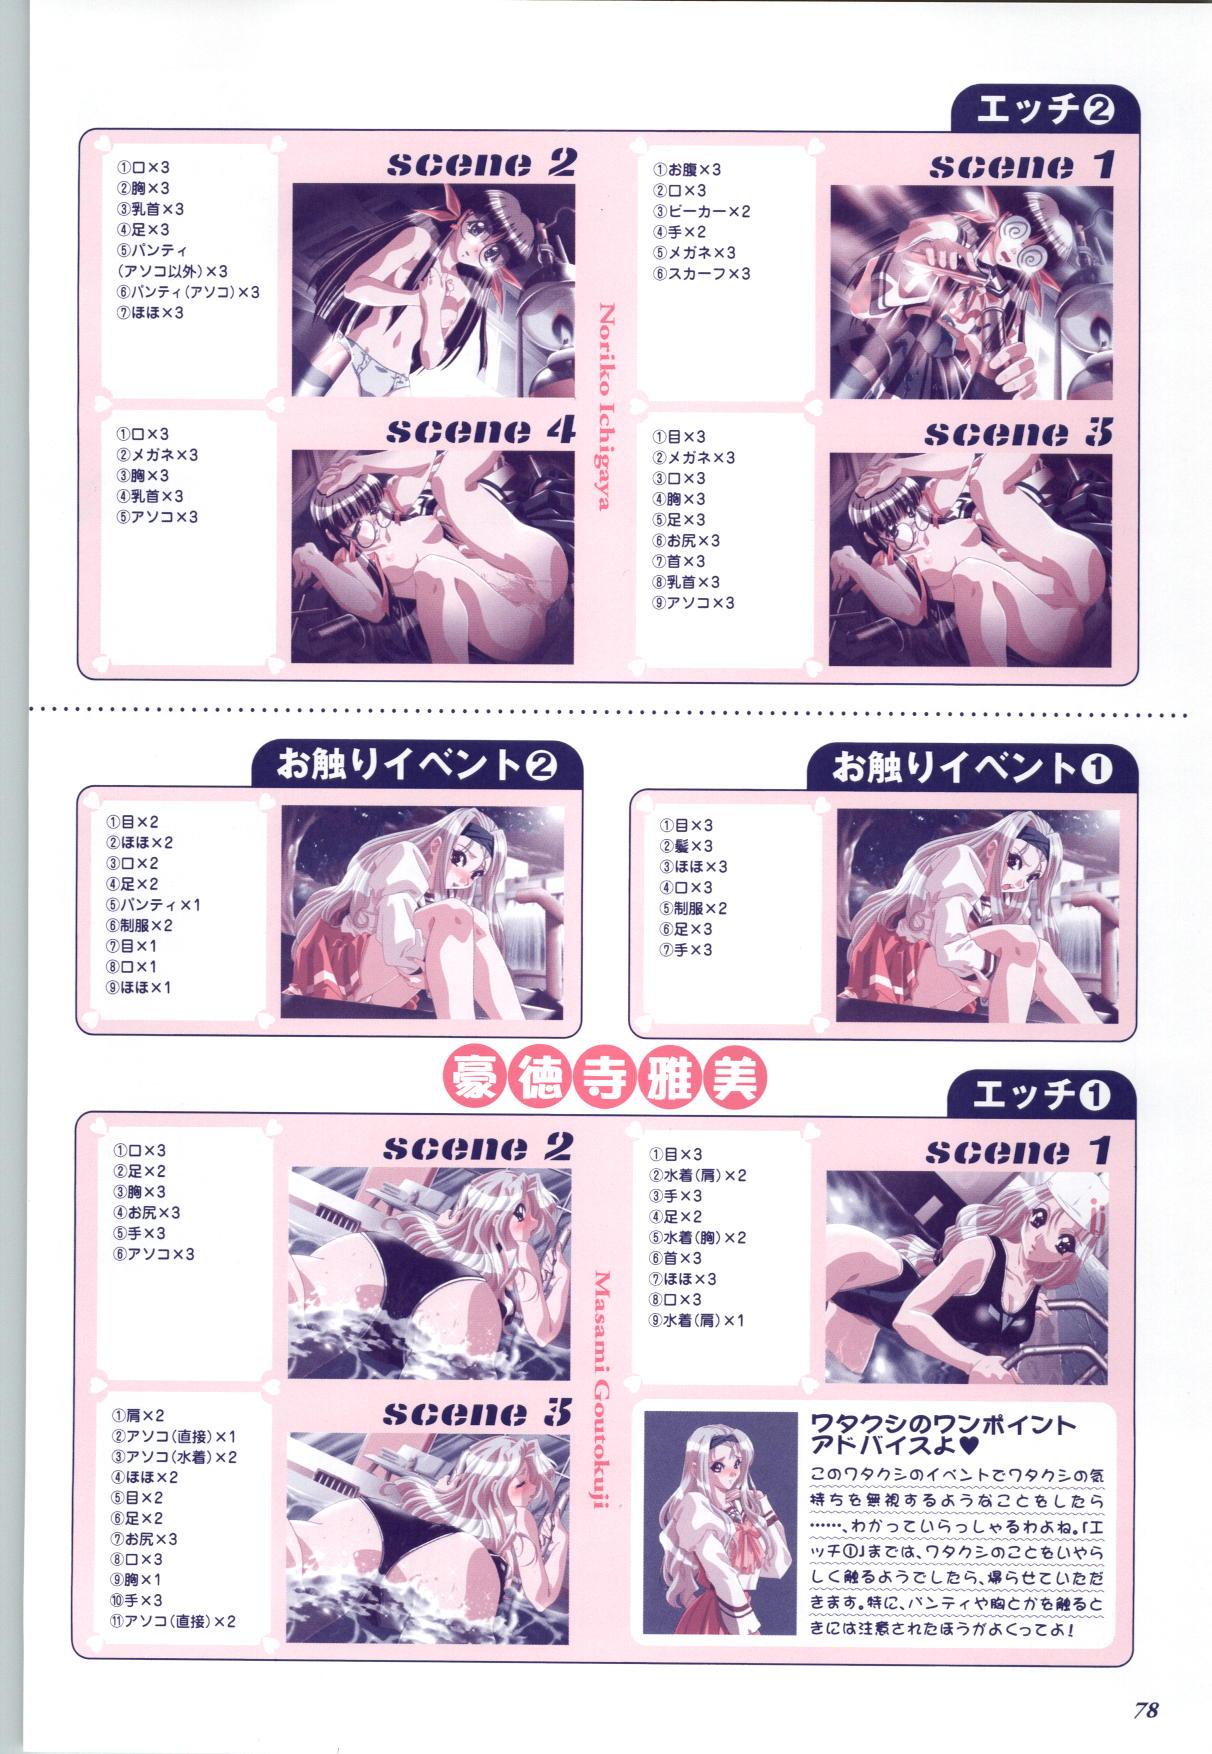 [Mink] Touch me ~Koi no Okusuri~ Computer Graphics & Original Pictures 79